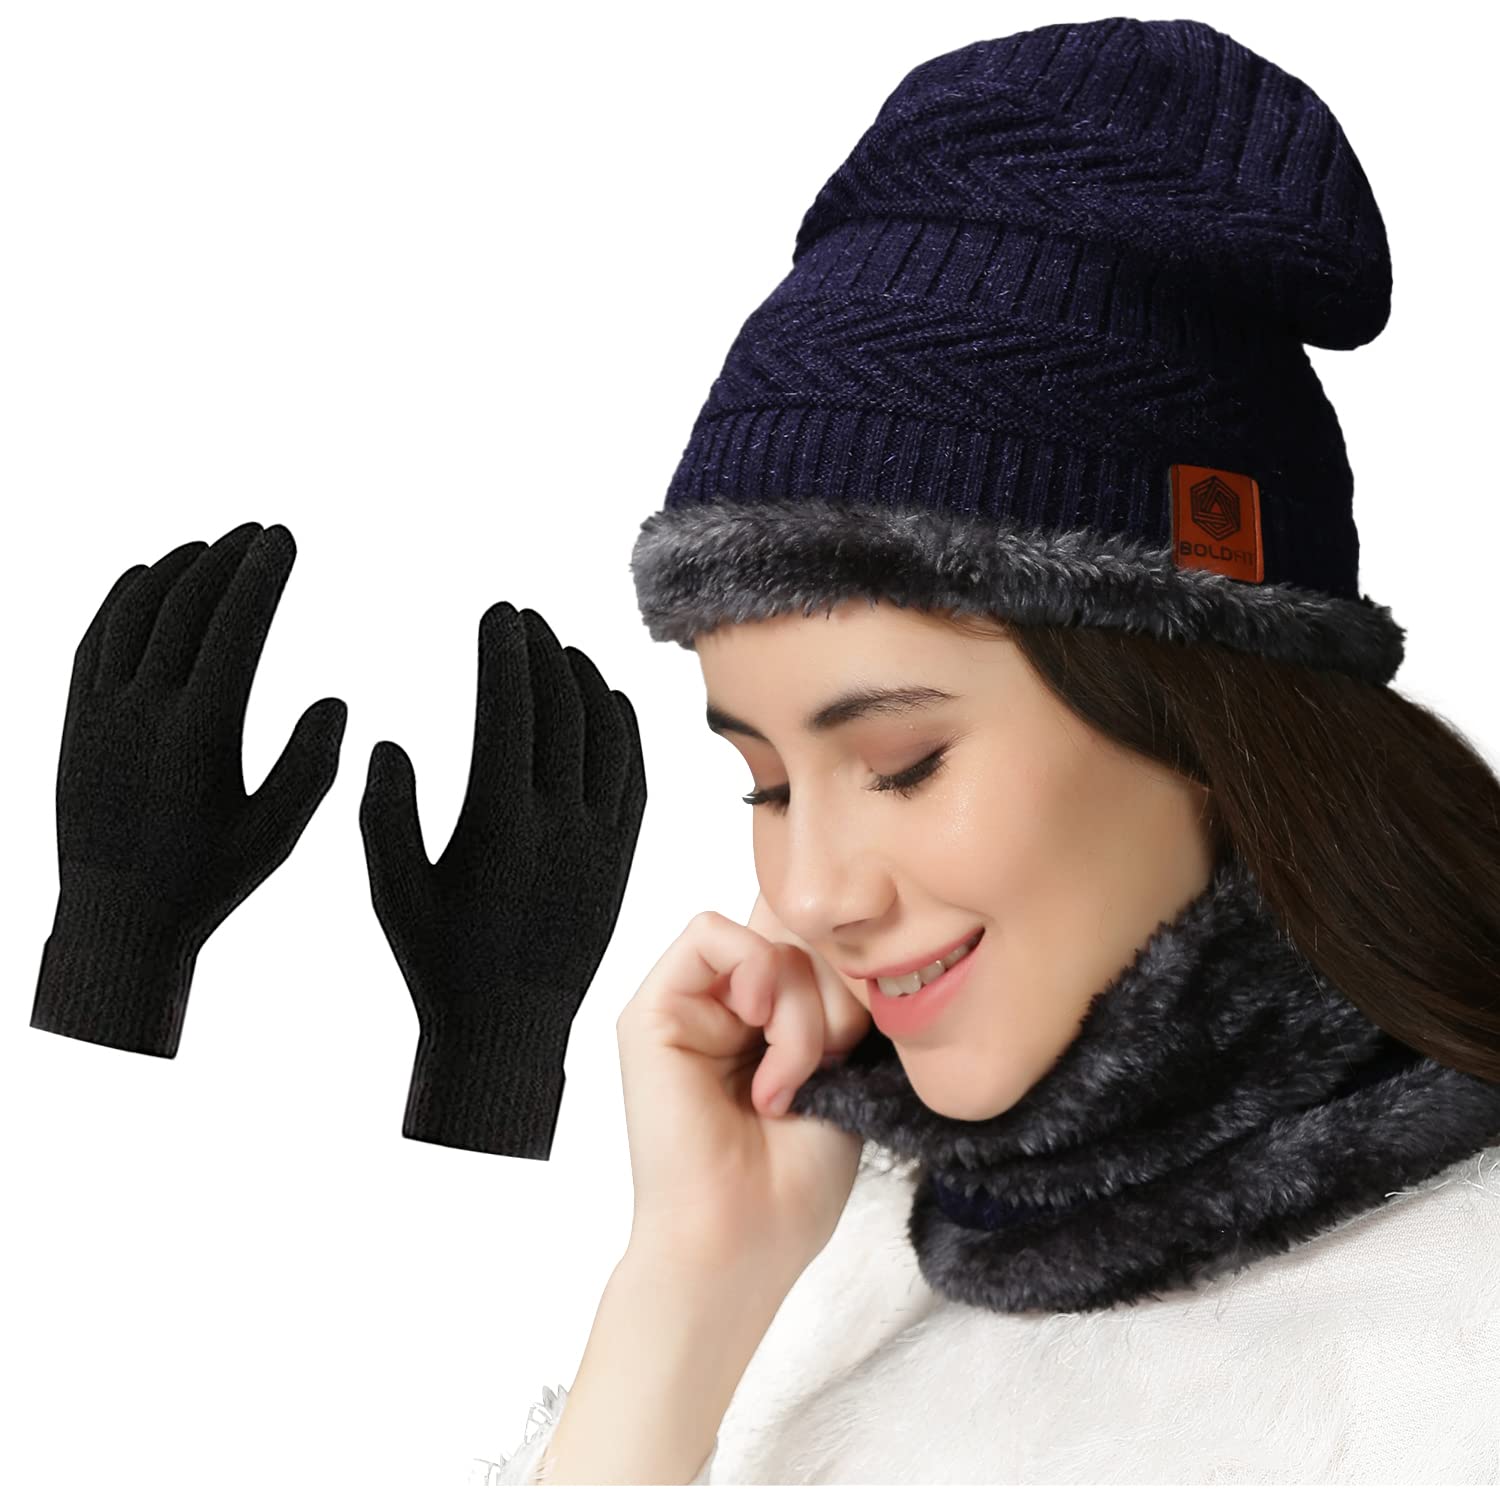 Winter Cap Set with Gloves - Blue Black